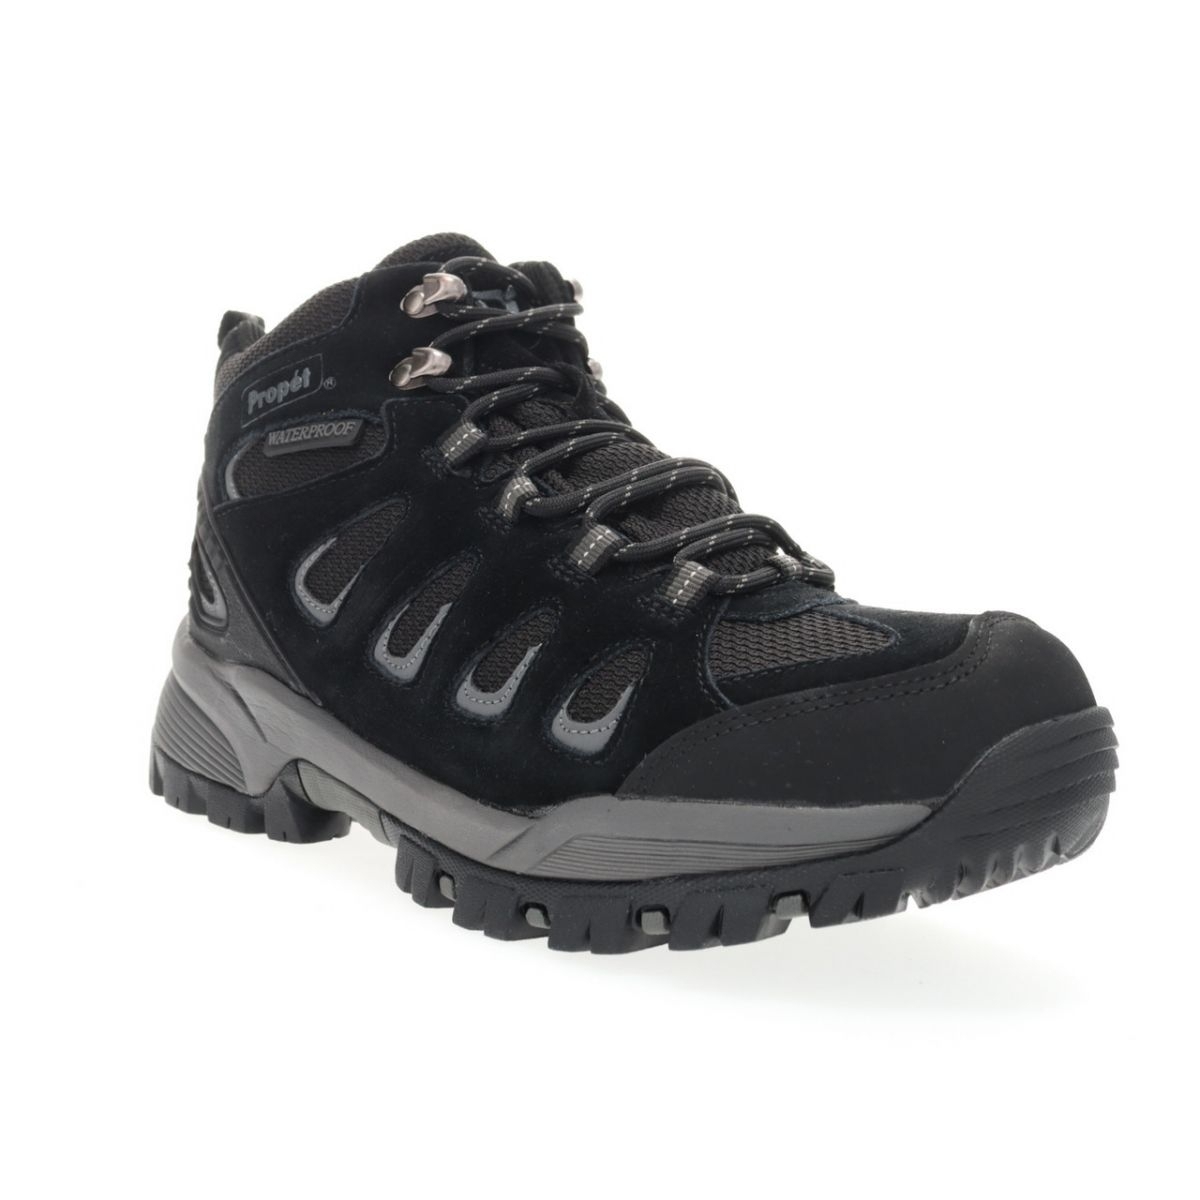 Propet Men's Ridge Walker Hiking Boot Black - M3599B 8 XX US Men BLACK - BLACK, 10.5 X-Wide